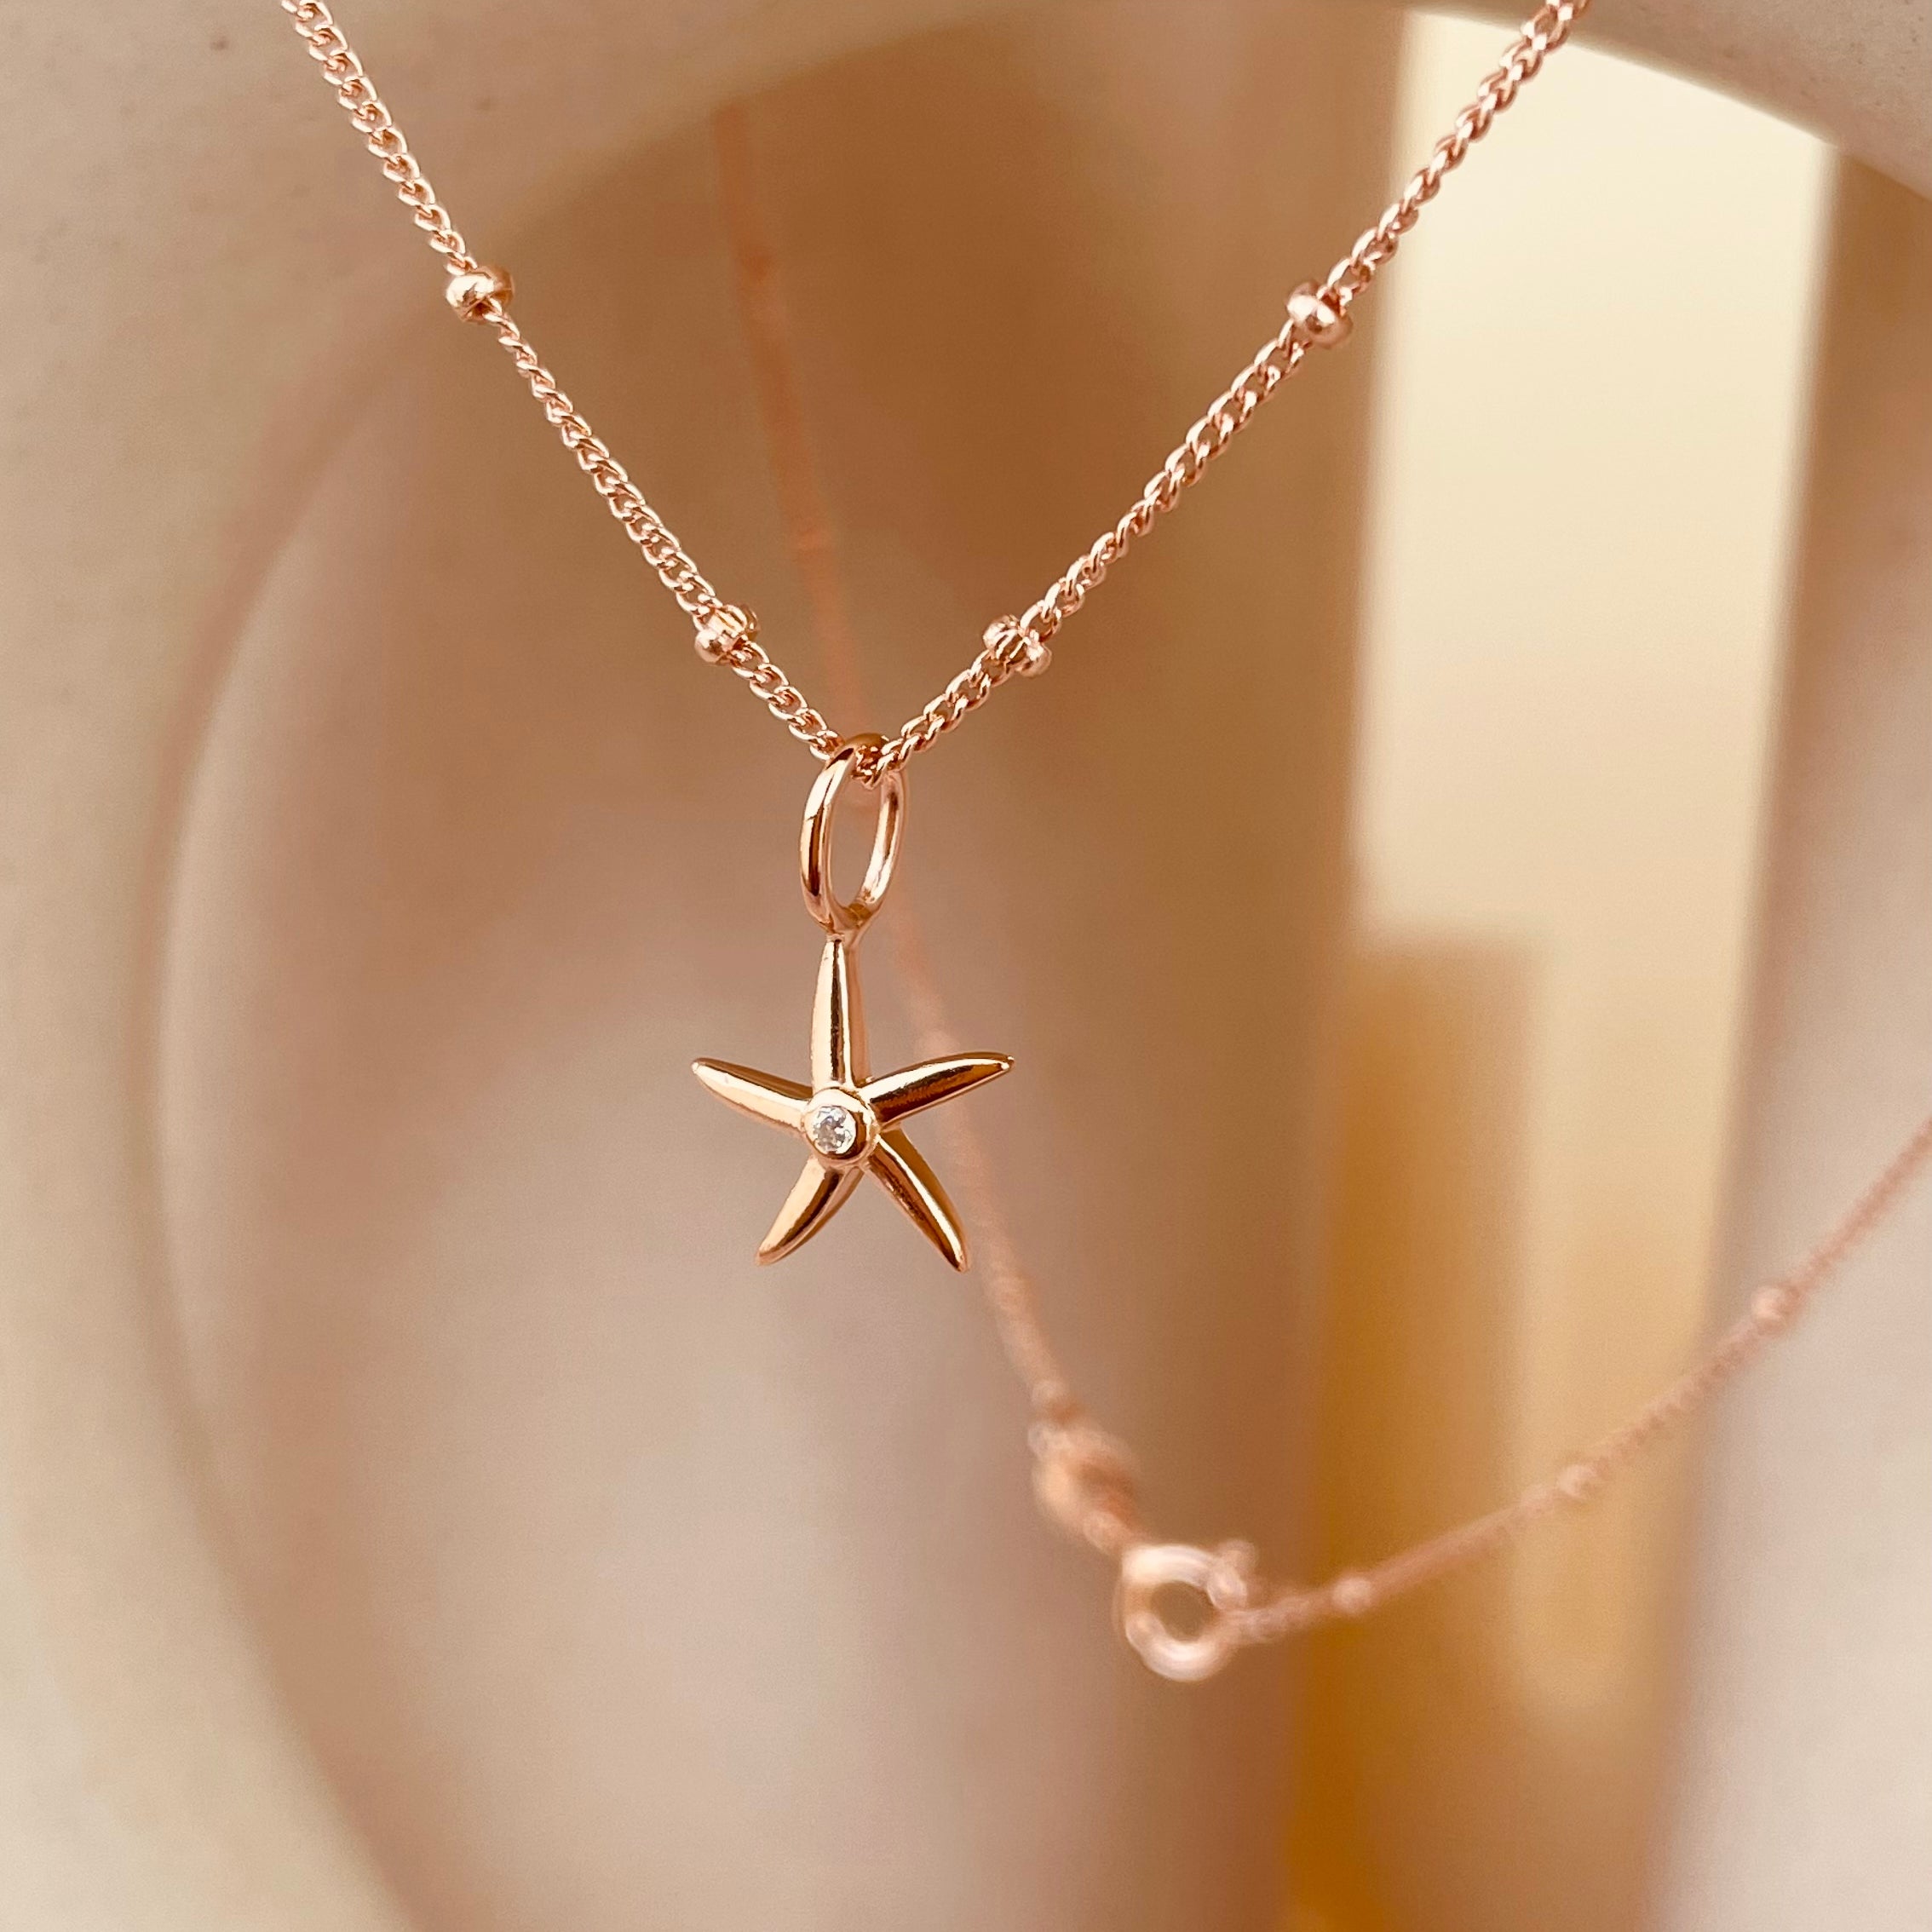 Minimal Starfish Necklace with Satellite Chain - Octonov 